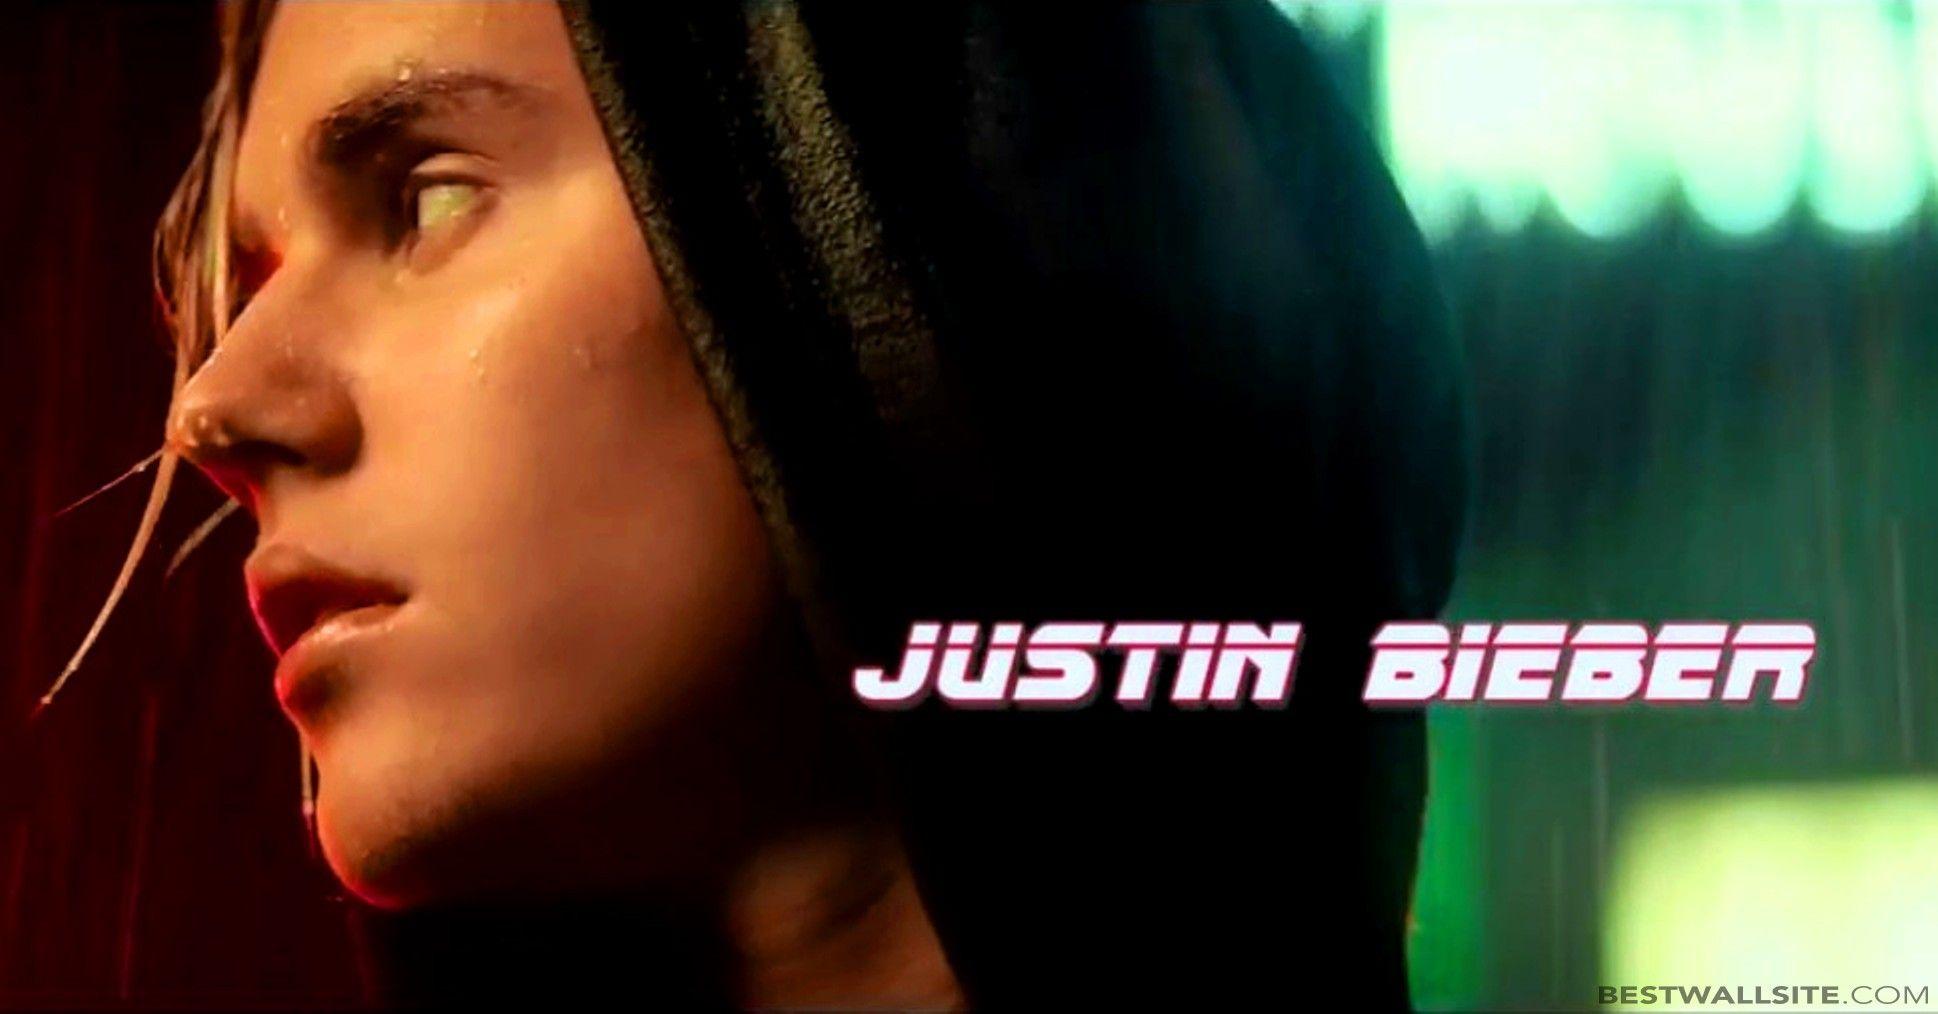 Why do you mean. Джастин Бибер 2015 what do you mean. Justin Bieber what do you mean. Turn to you Джастин Бибер. Justin Bieber “what do you mean?” Концерт.